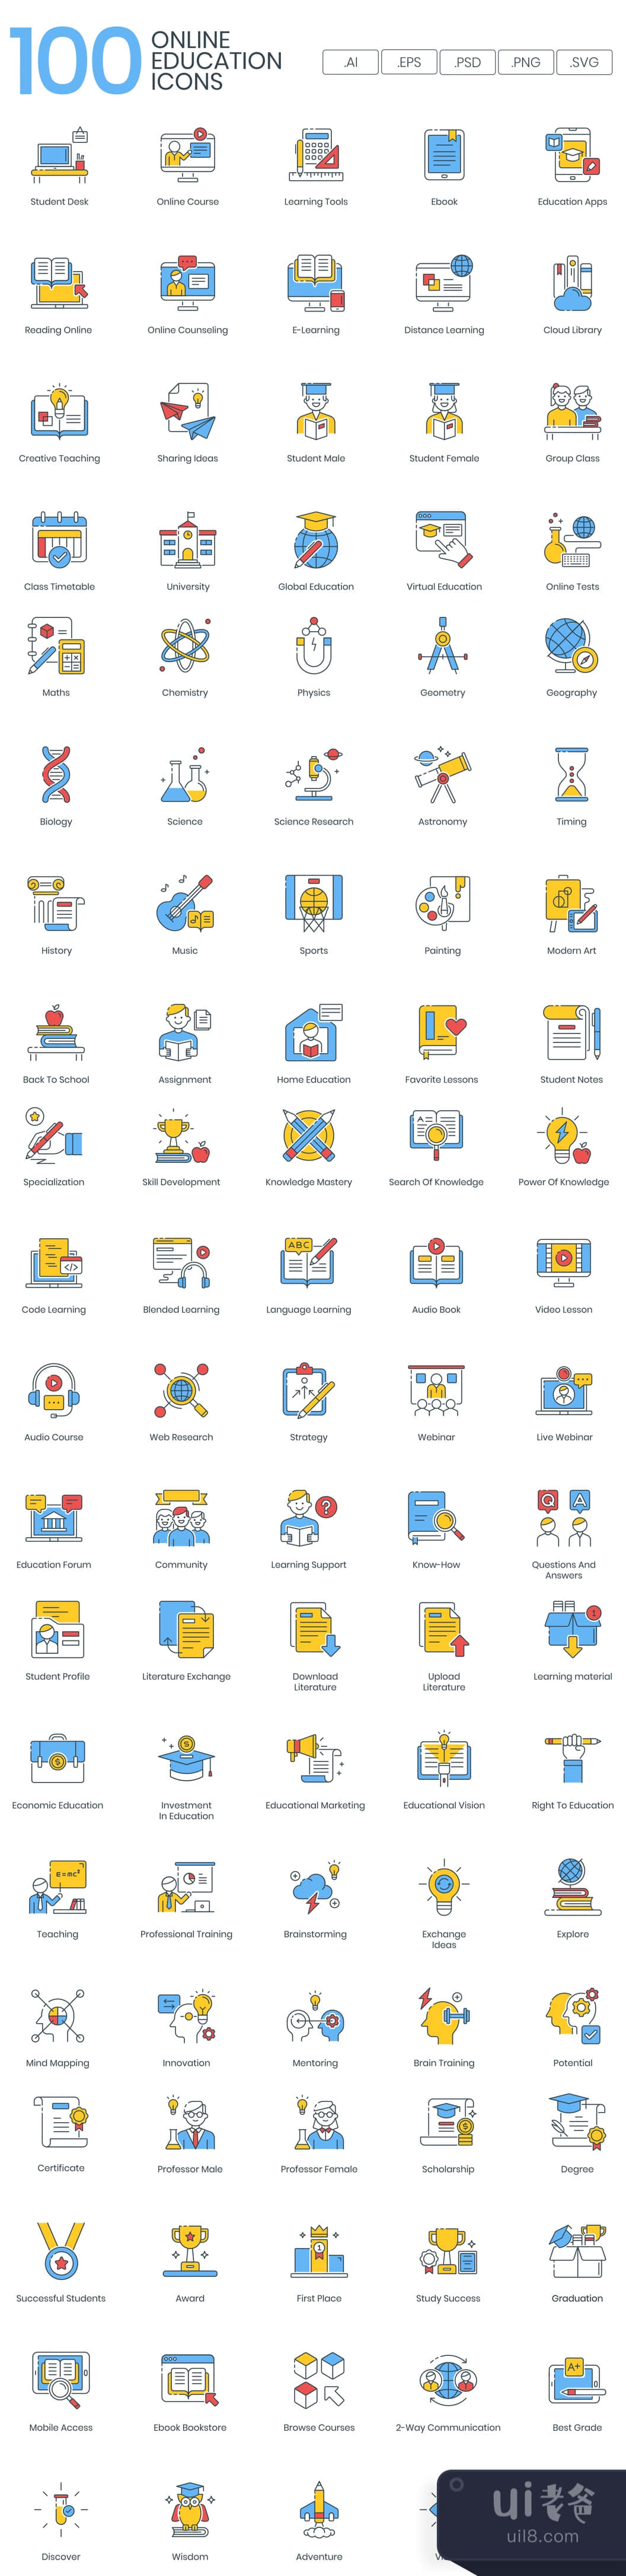 100个在线教育图标 (100 Online Education Icons)插图1